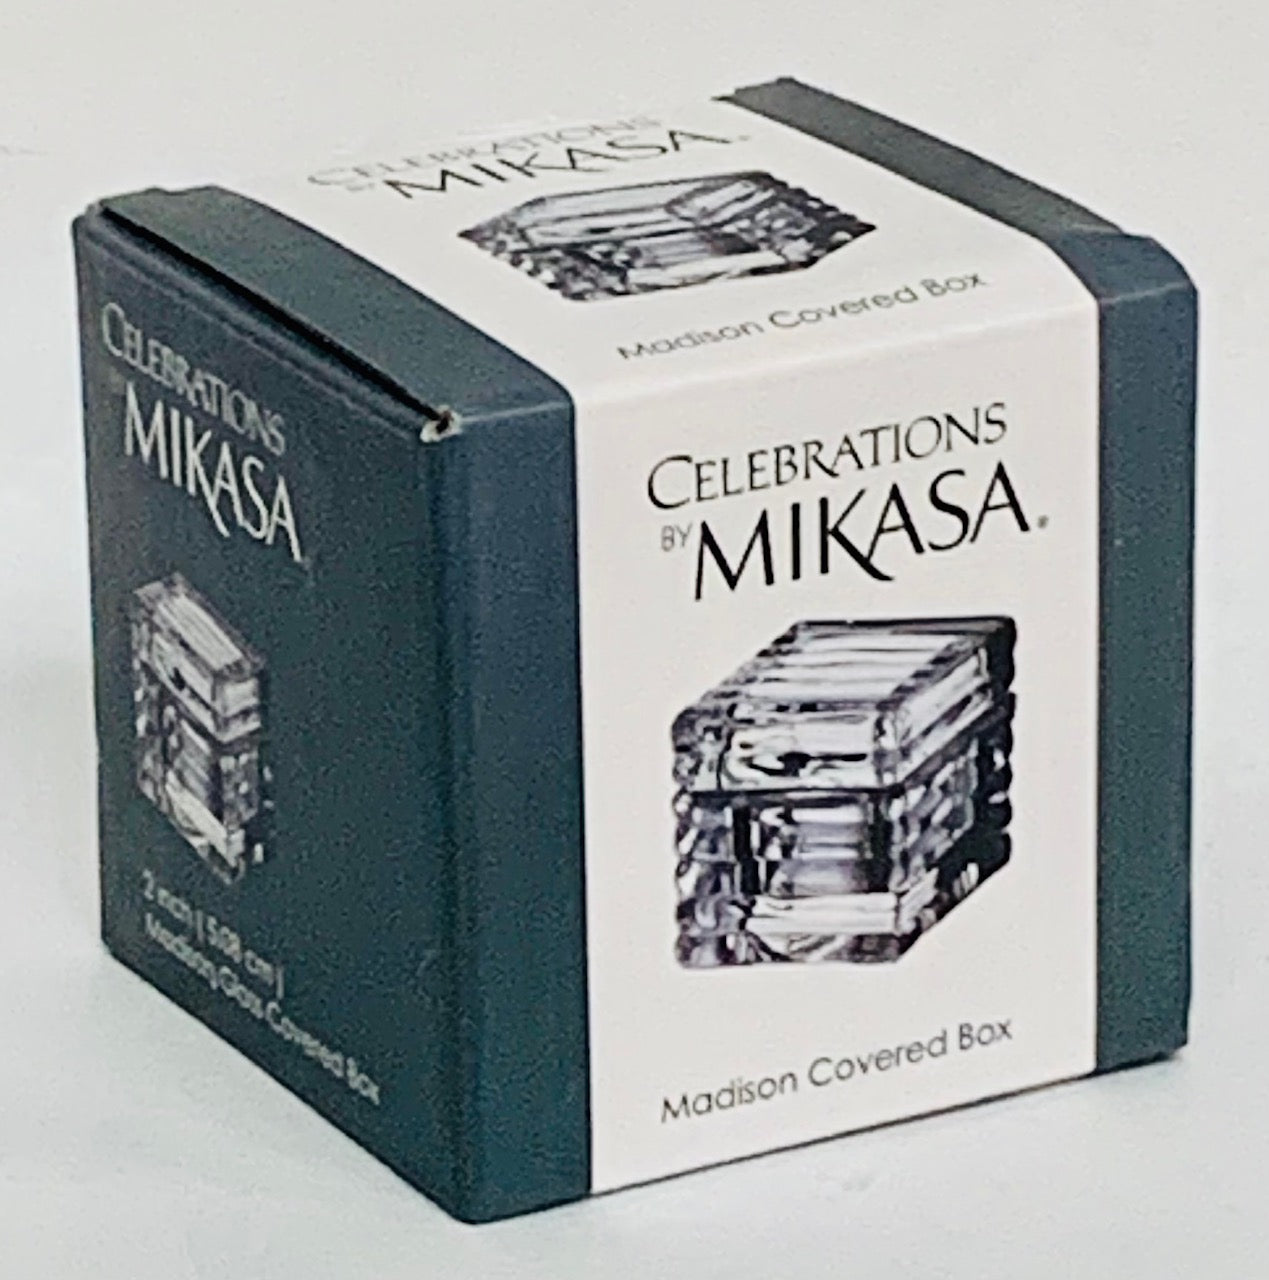 Mikasa Madison Glass Covered Box - Celebrations Collection - Royal Gift